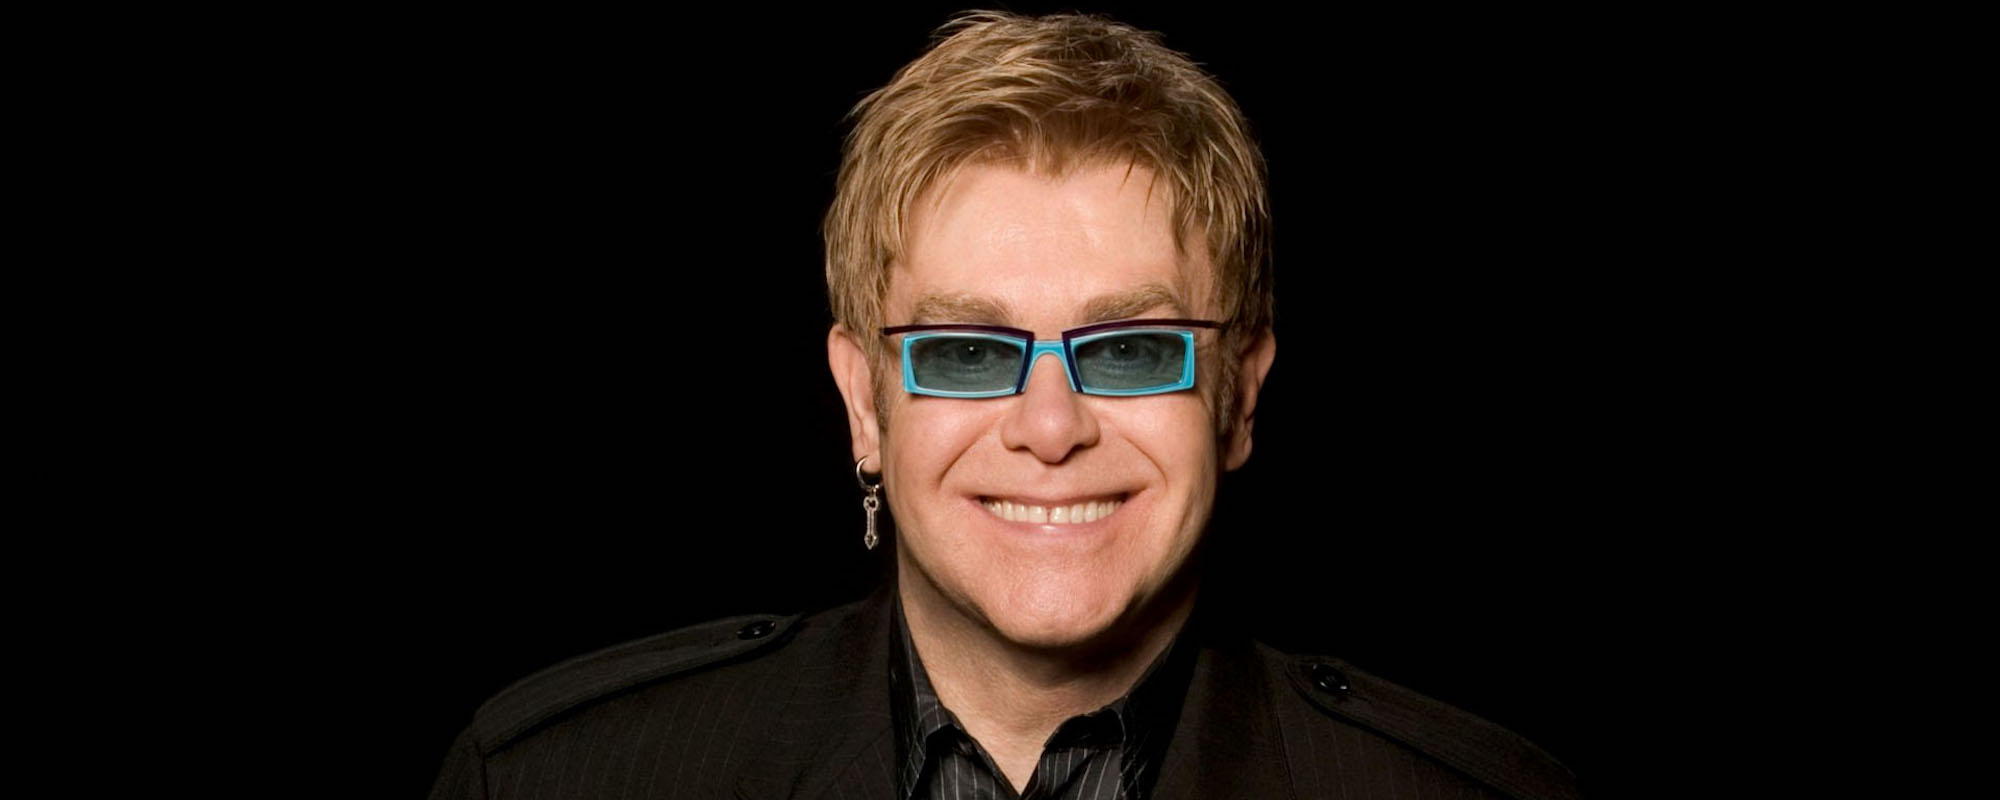 Elton John Shares Health Update After Postponing Farewell Tour